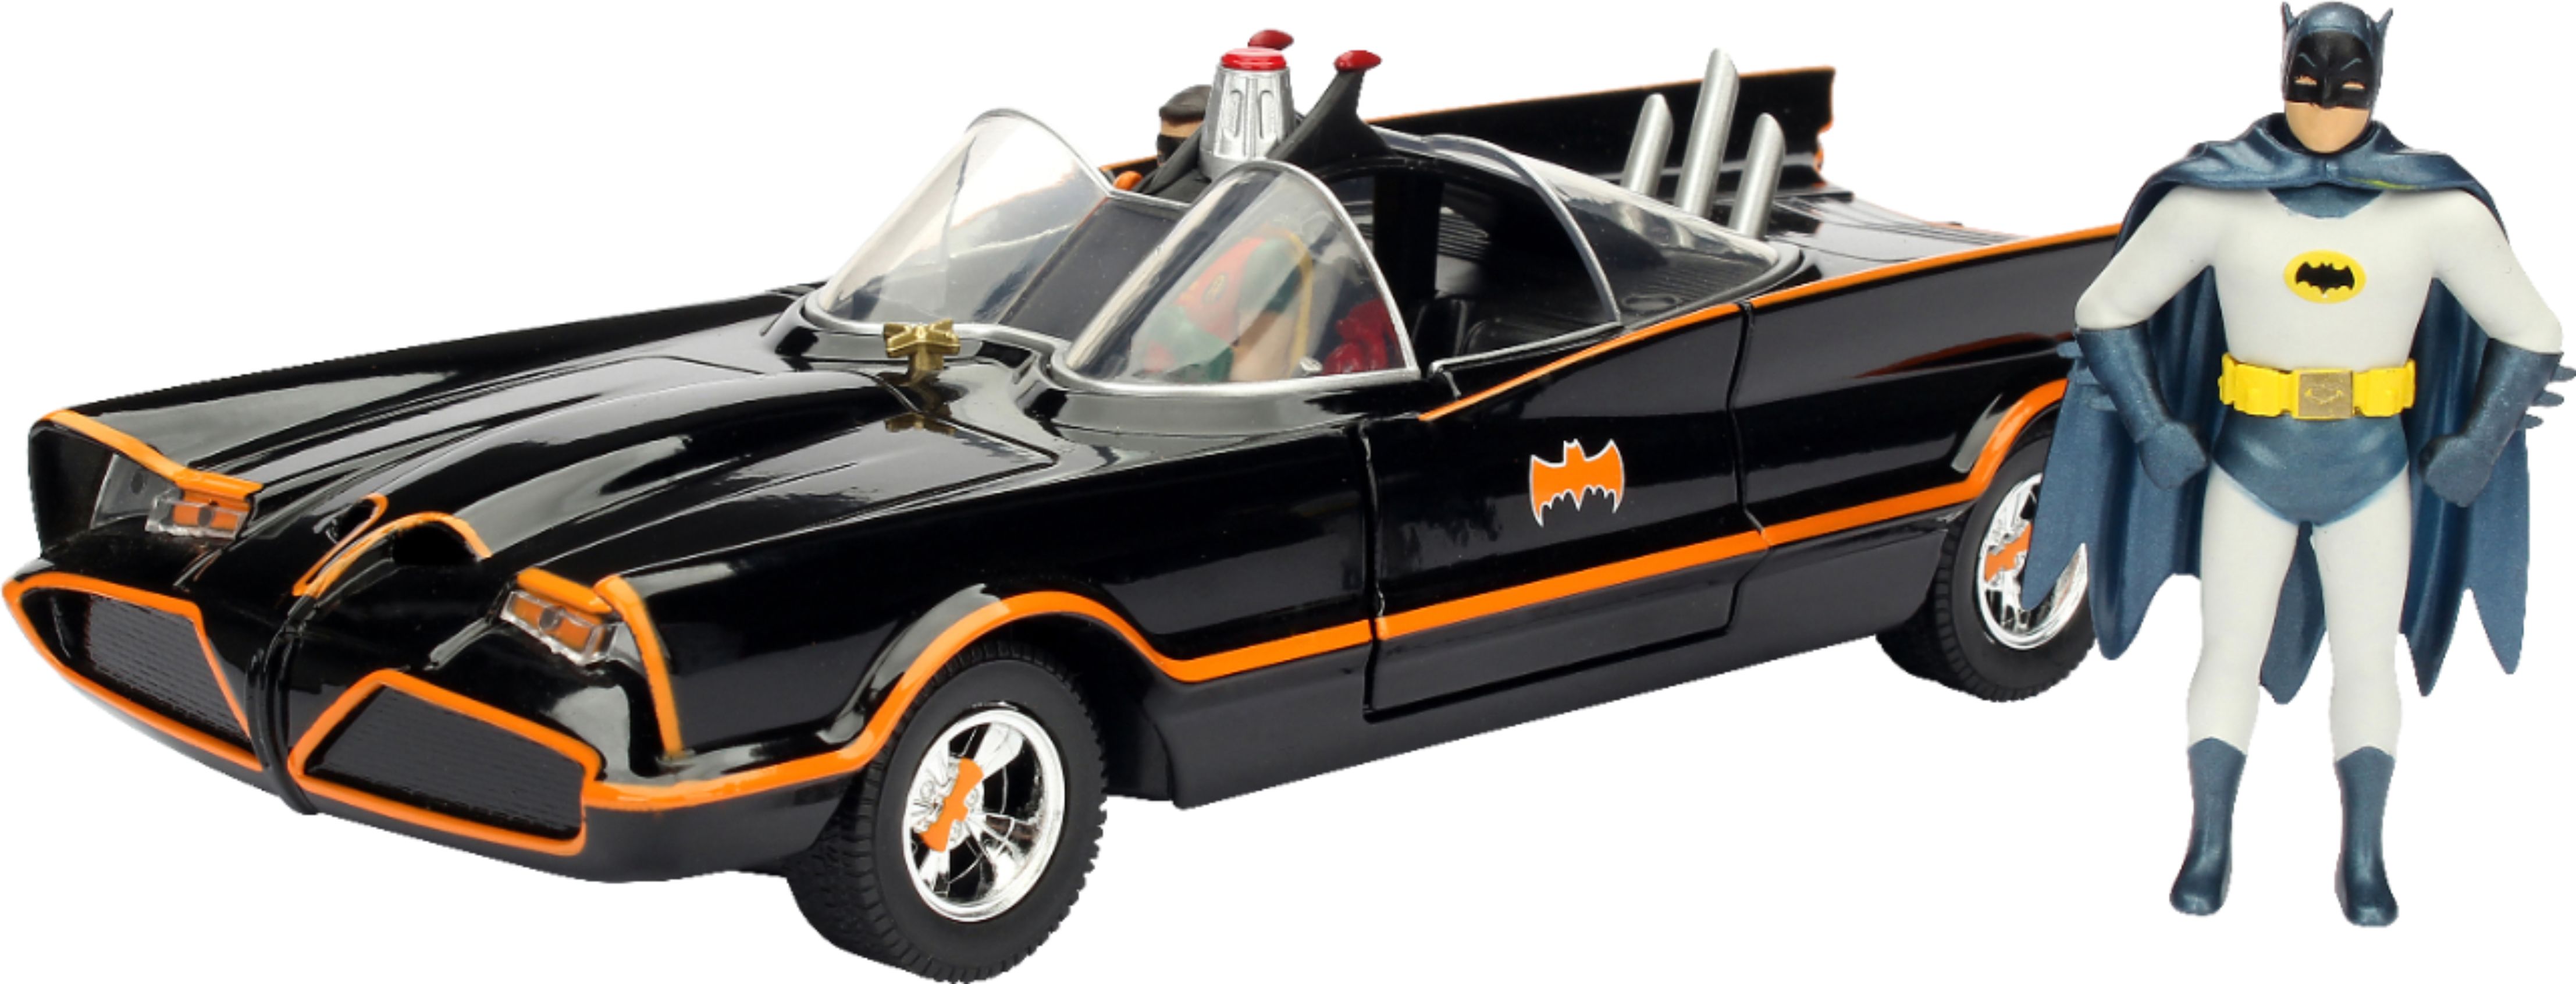 Batmobile Classic TV Séries + Figurine Batman Jada collection